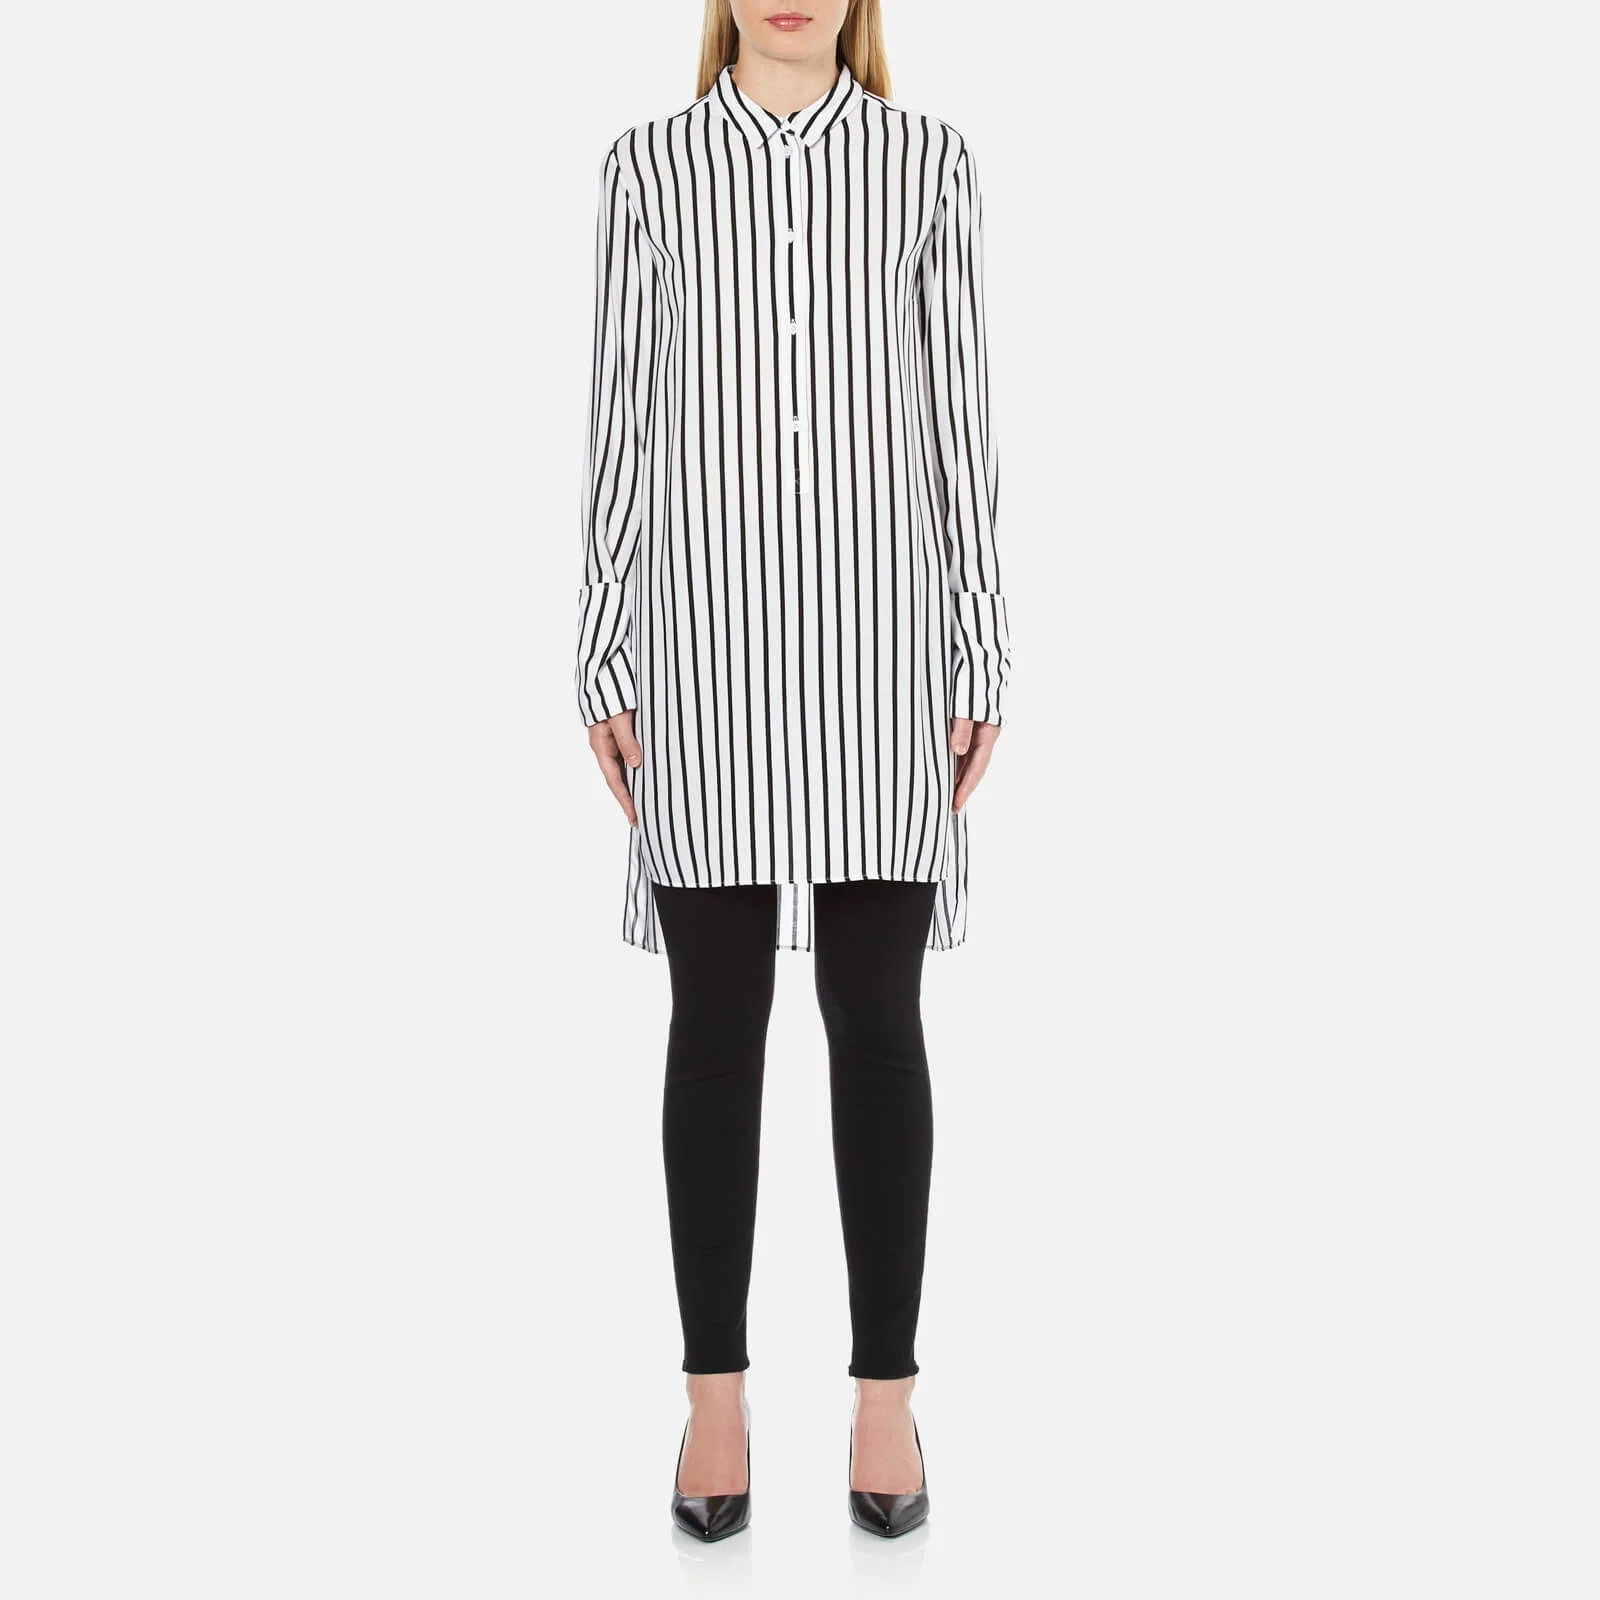 McQ Alexander McQueen Women's Tunic Shirt Dress - White/Black Stripe Image 1